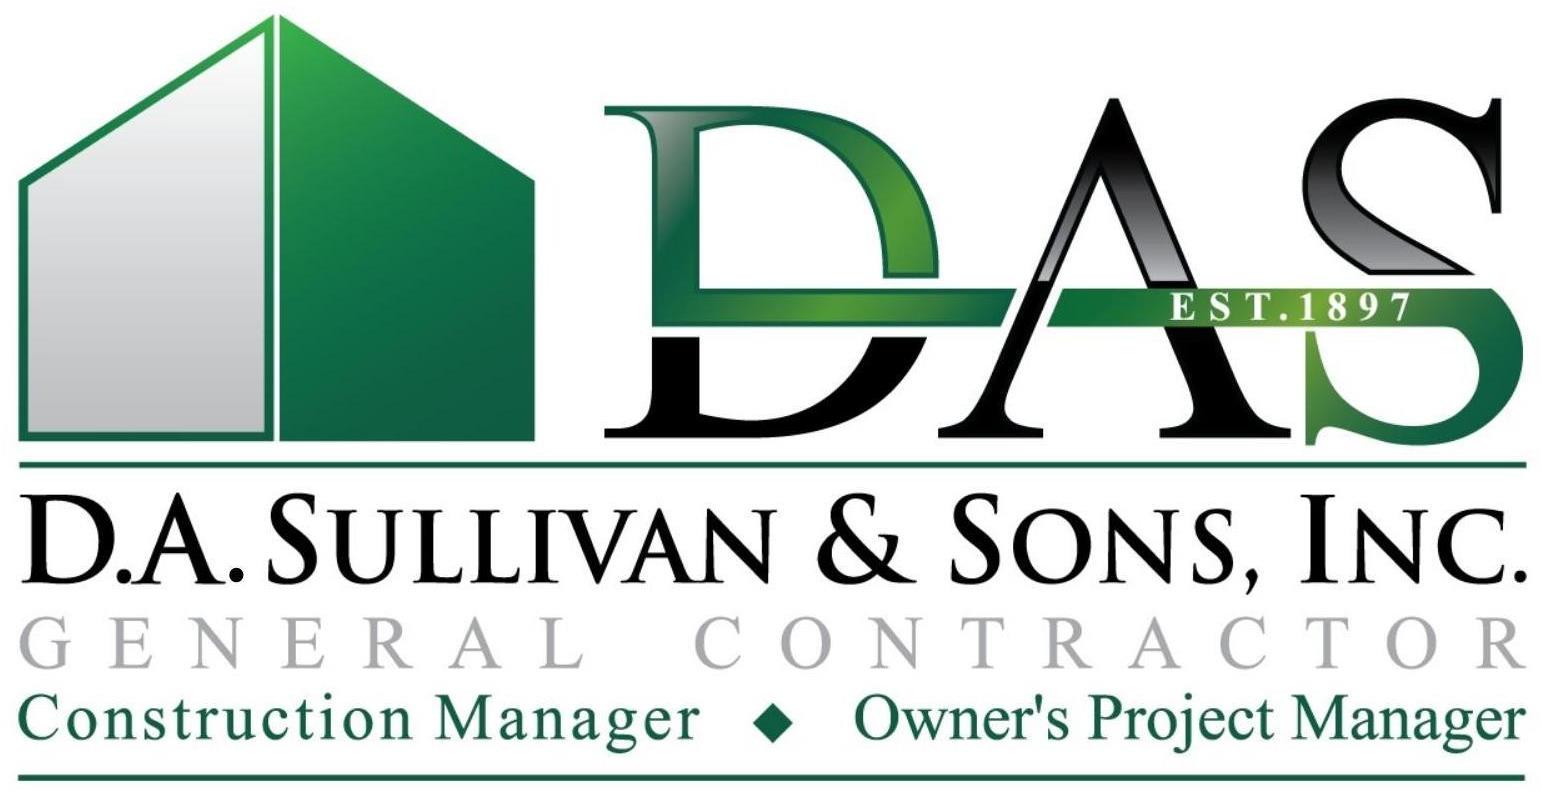 D.A. Sullivan & Sons